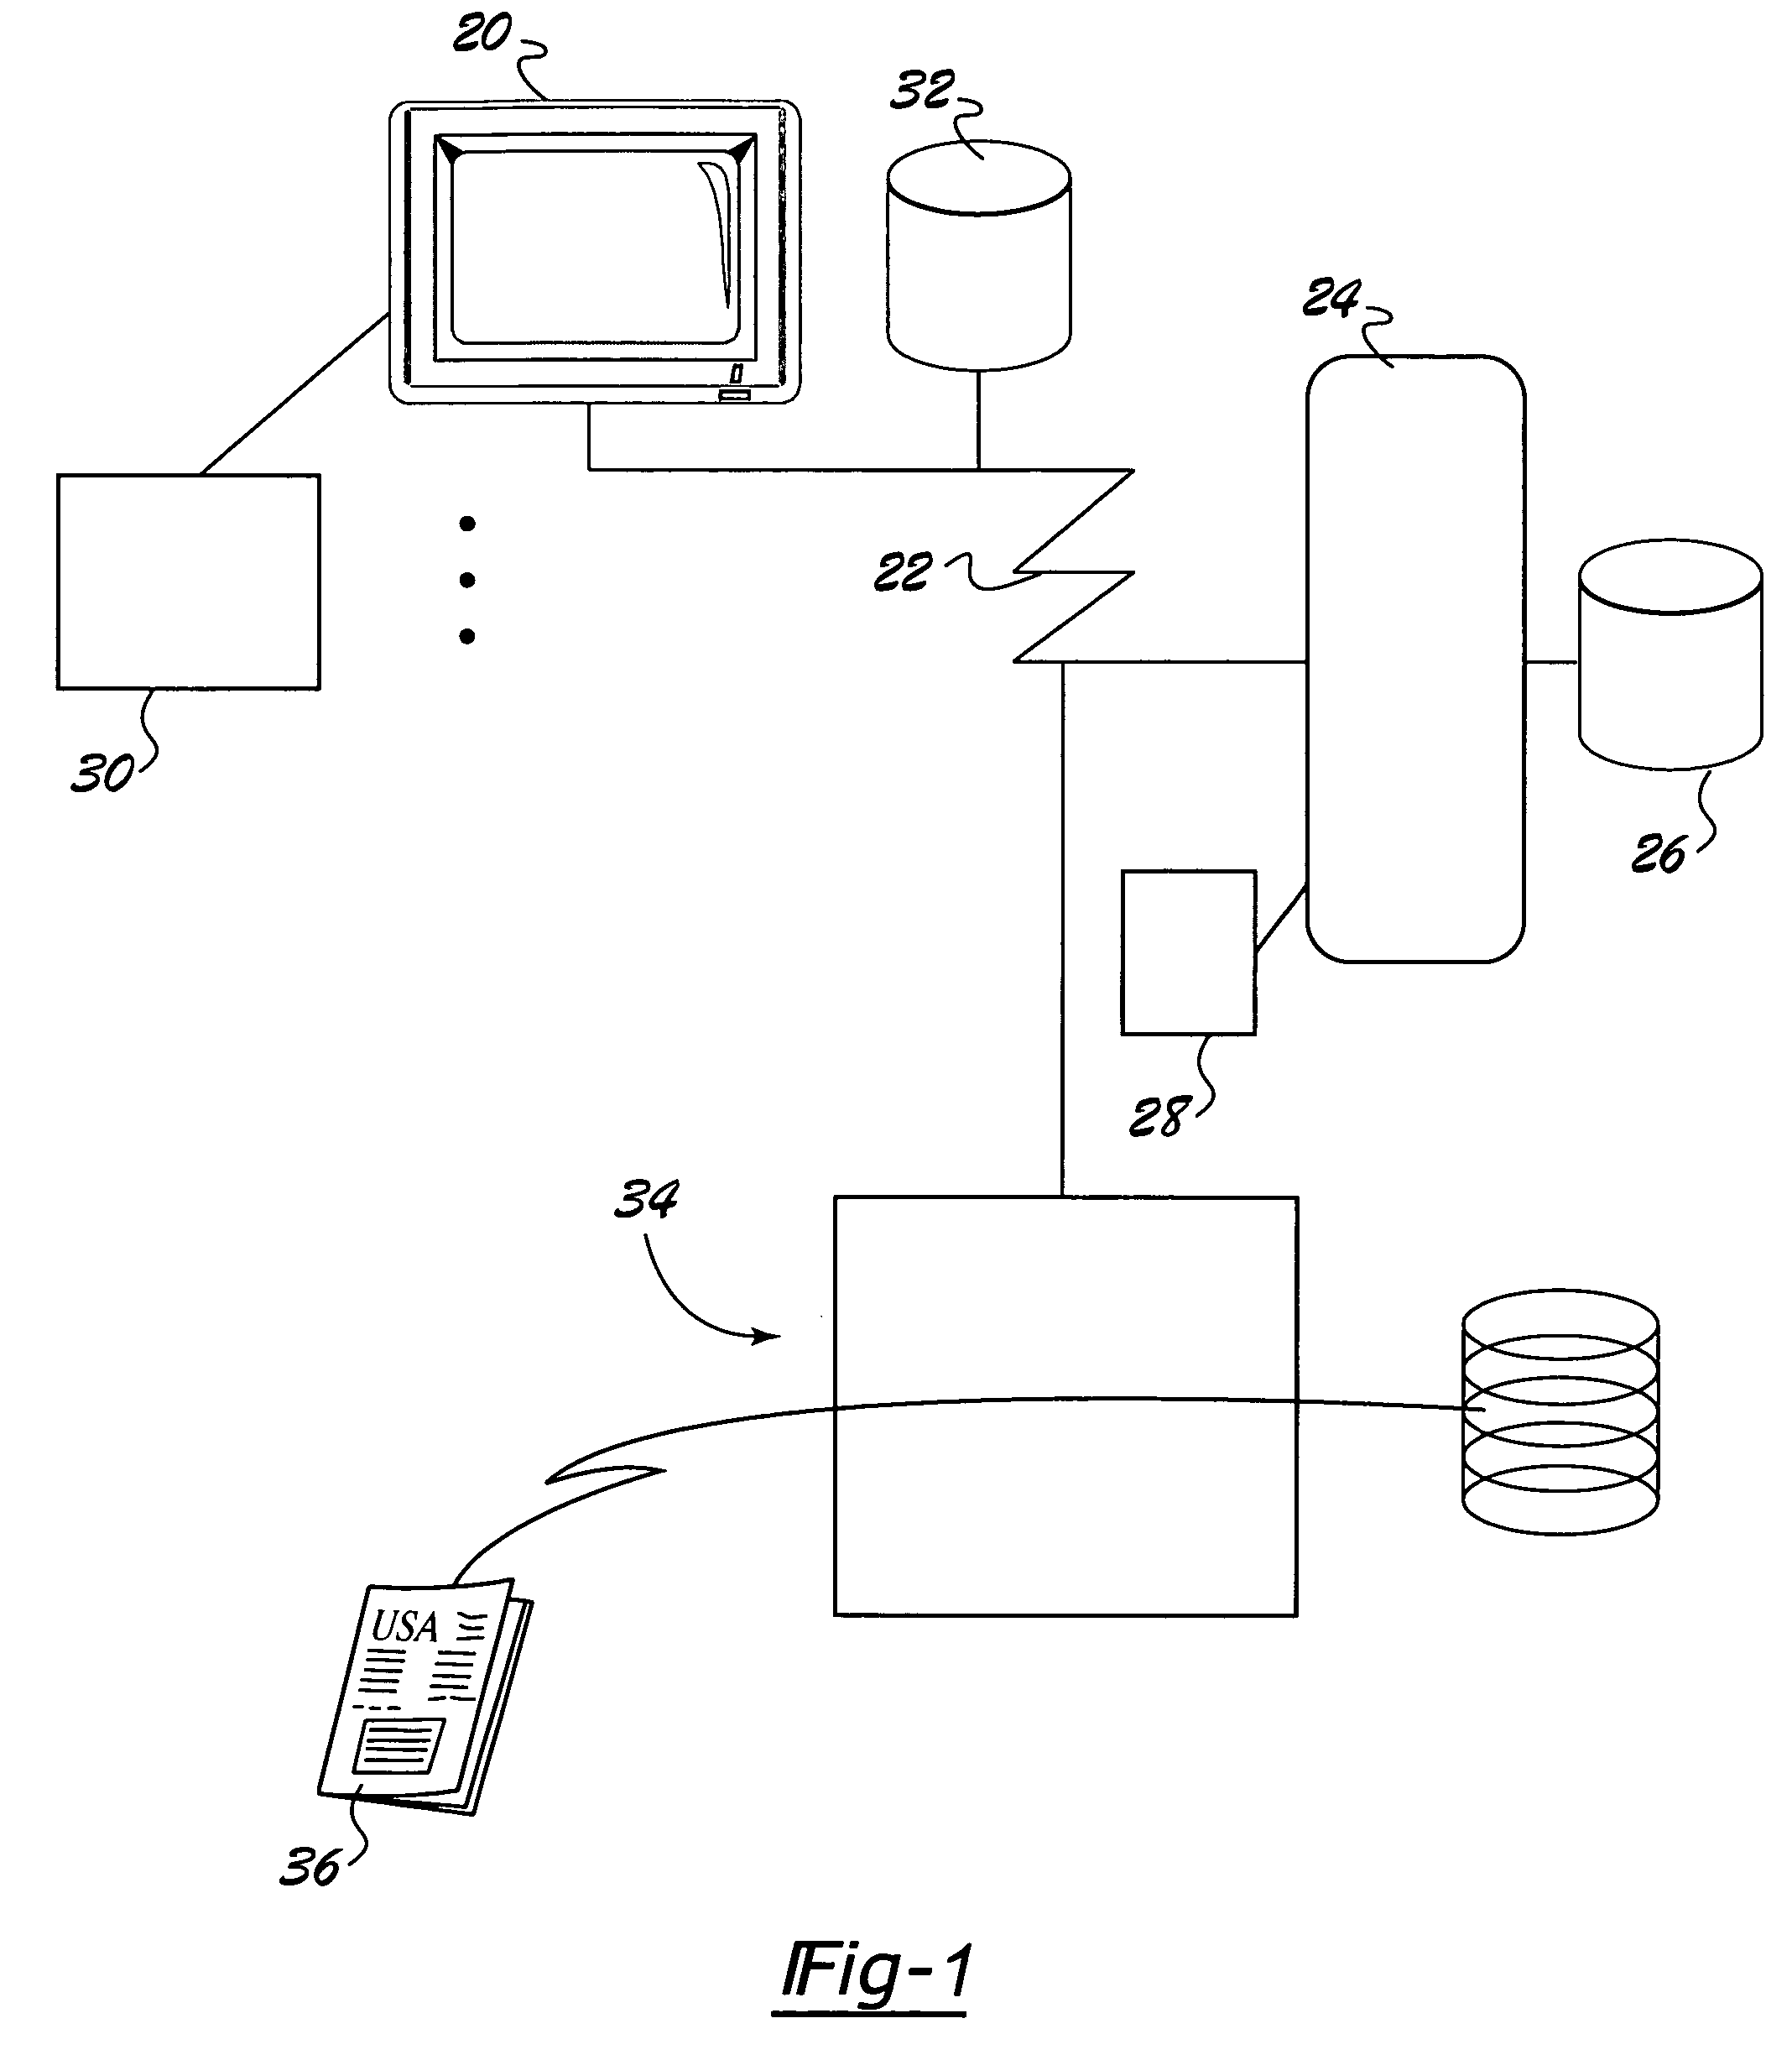 Computer-implemented patent portfolio analysis method and apparatus